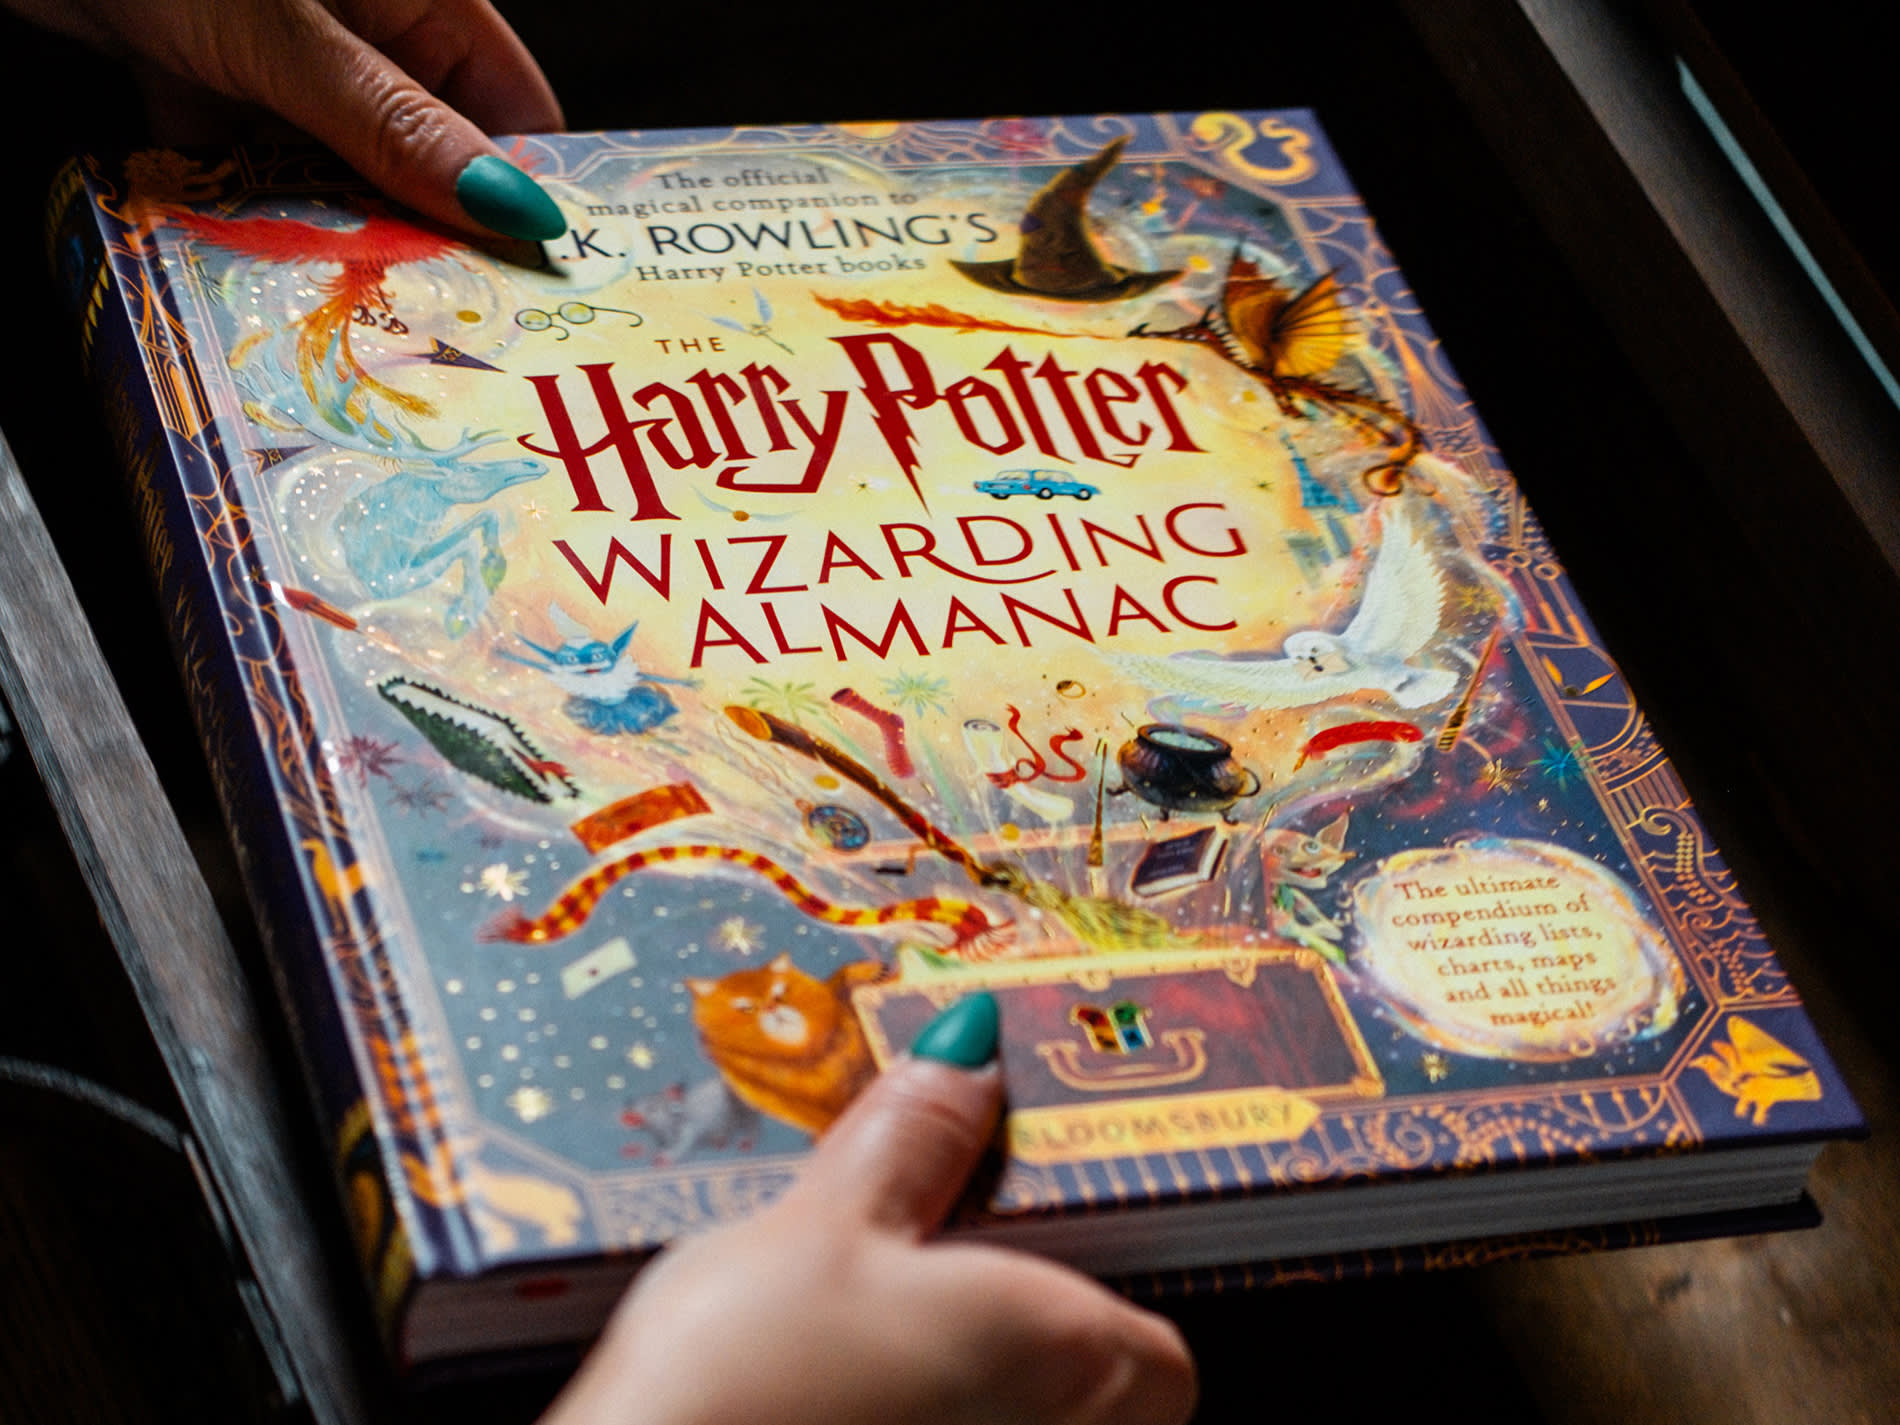 HP-wizarding-almanac-book-lifestyle